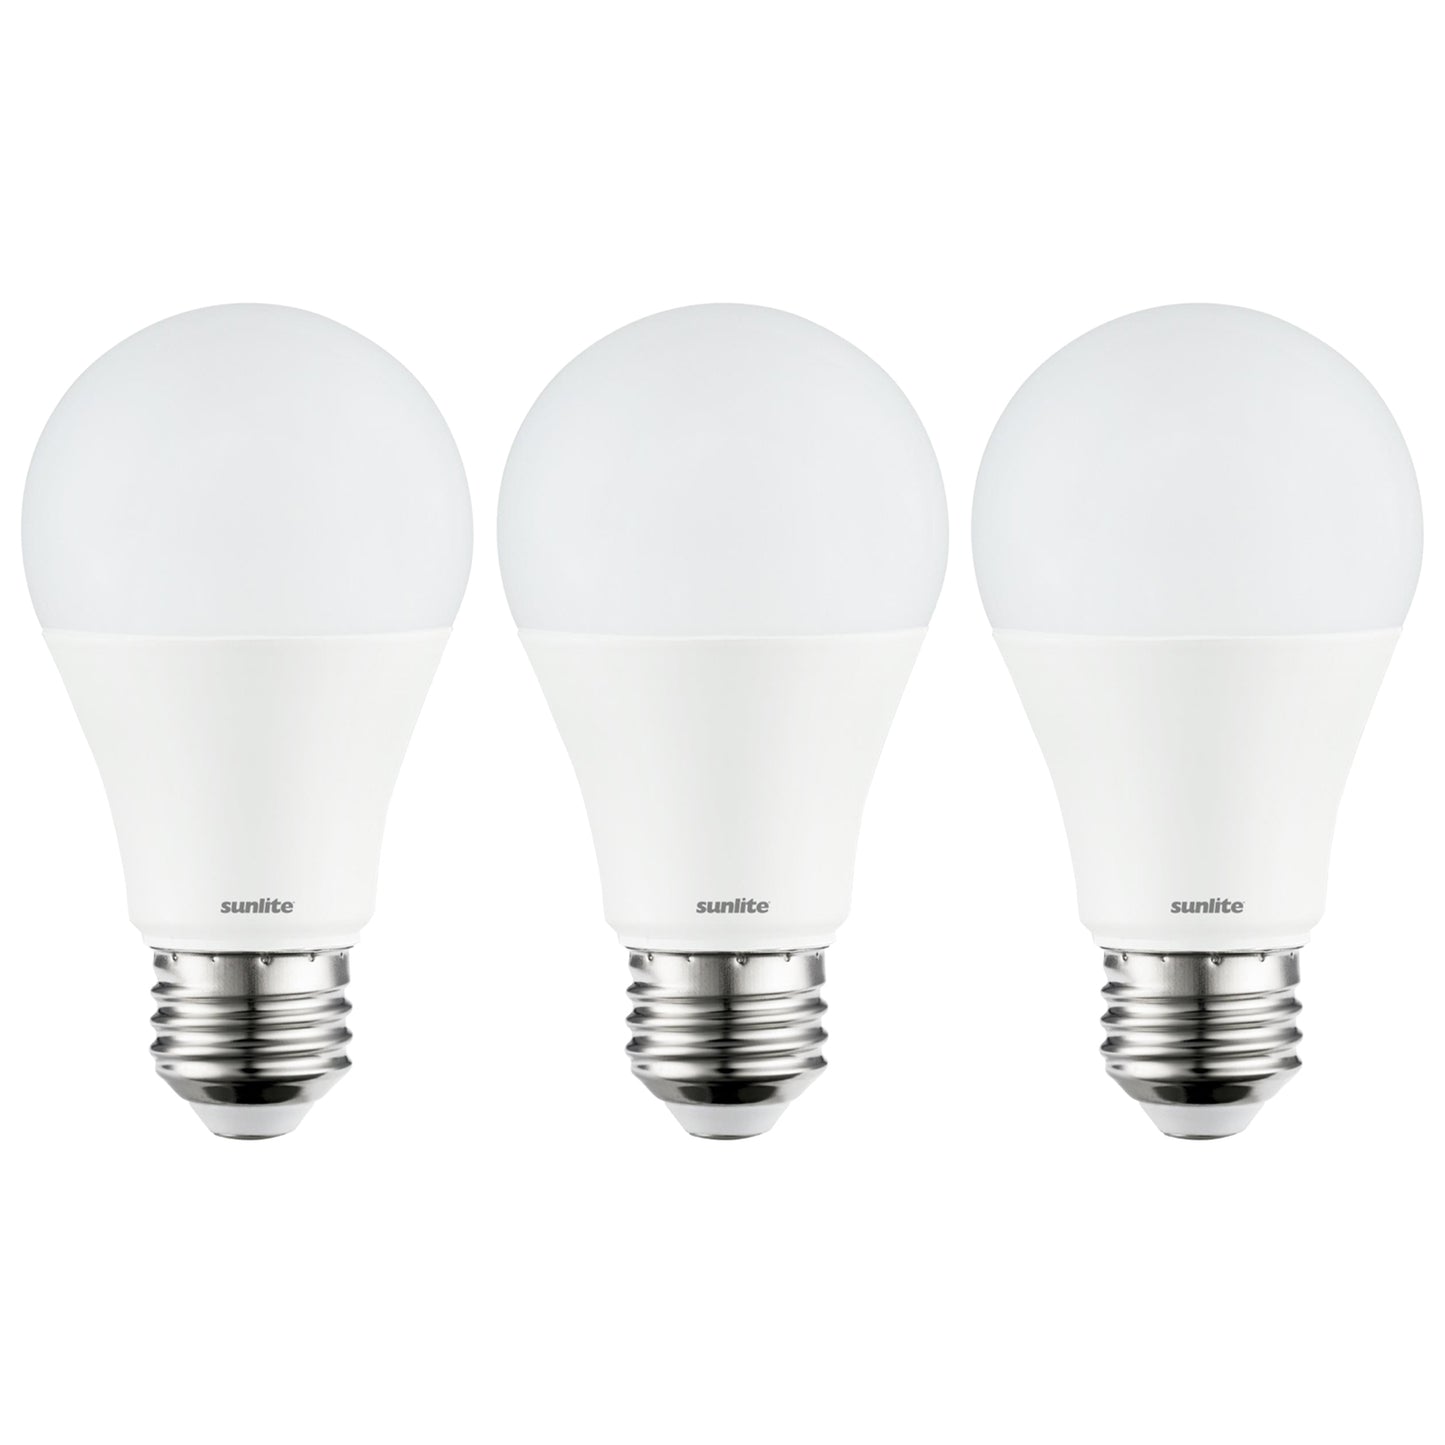 3 Pack Sunlite A19 LED Bulbs, 9 Watt (60 Watt Equivalent), 800 Lumens, Medium (E26) Base, 6500K Daylight, UL Listed